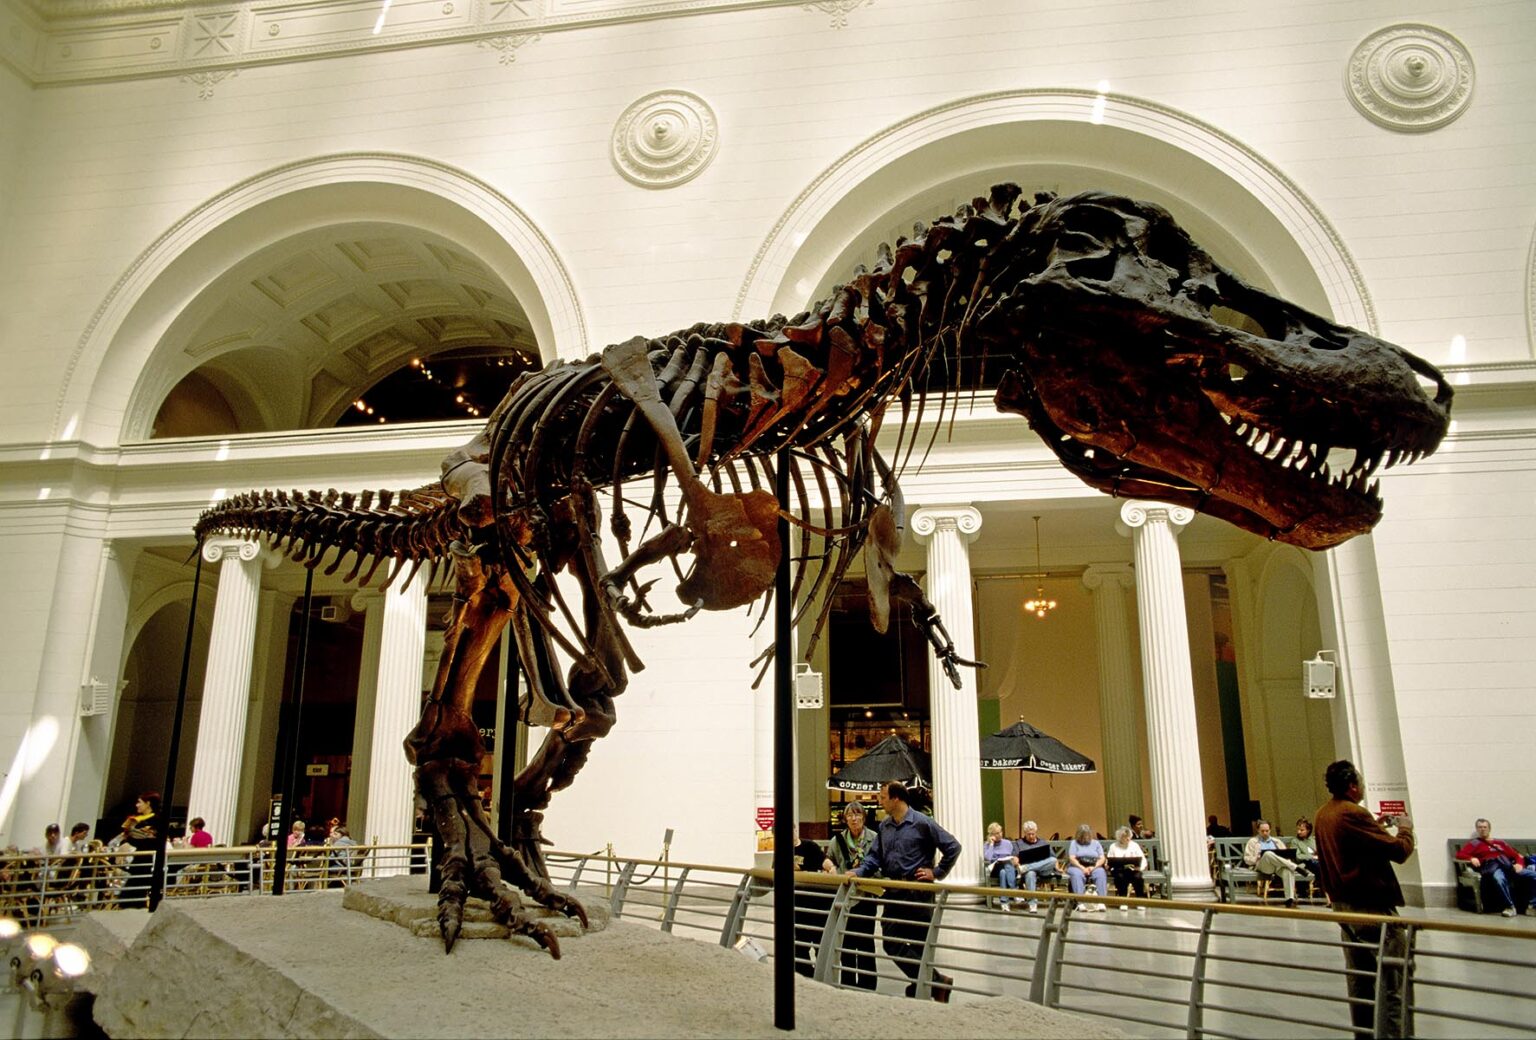 The TYRANNOSAURUS (Tyrannosaurus rex) SKELETON of SUE is on display inside the FIELD MUSEUM OF NATURAL HISTORY - CHICAGO, ILLINOIS